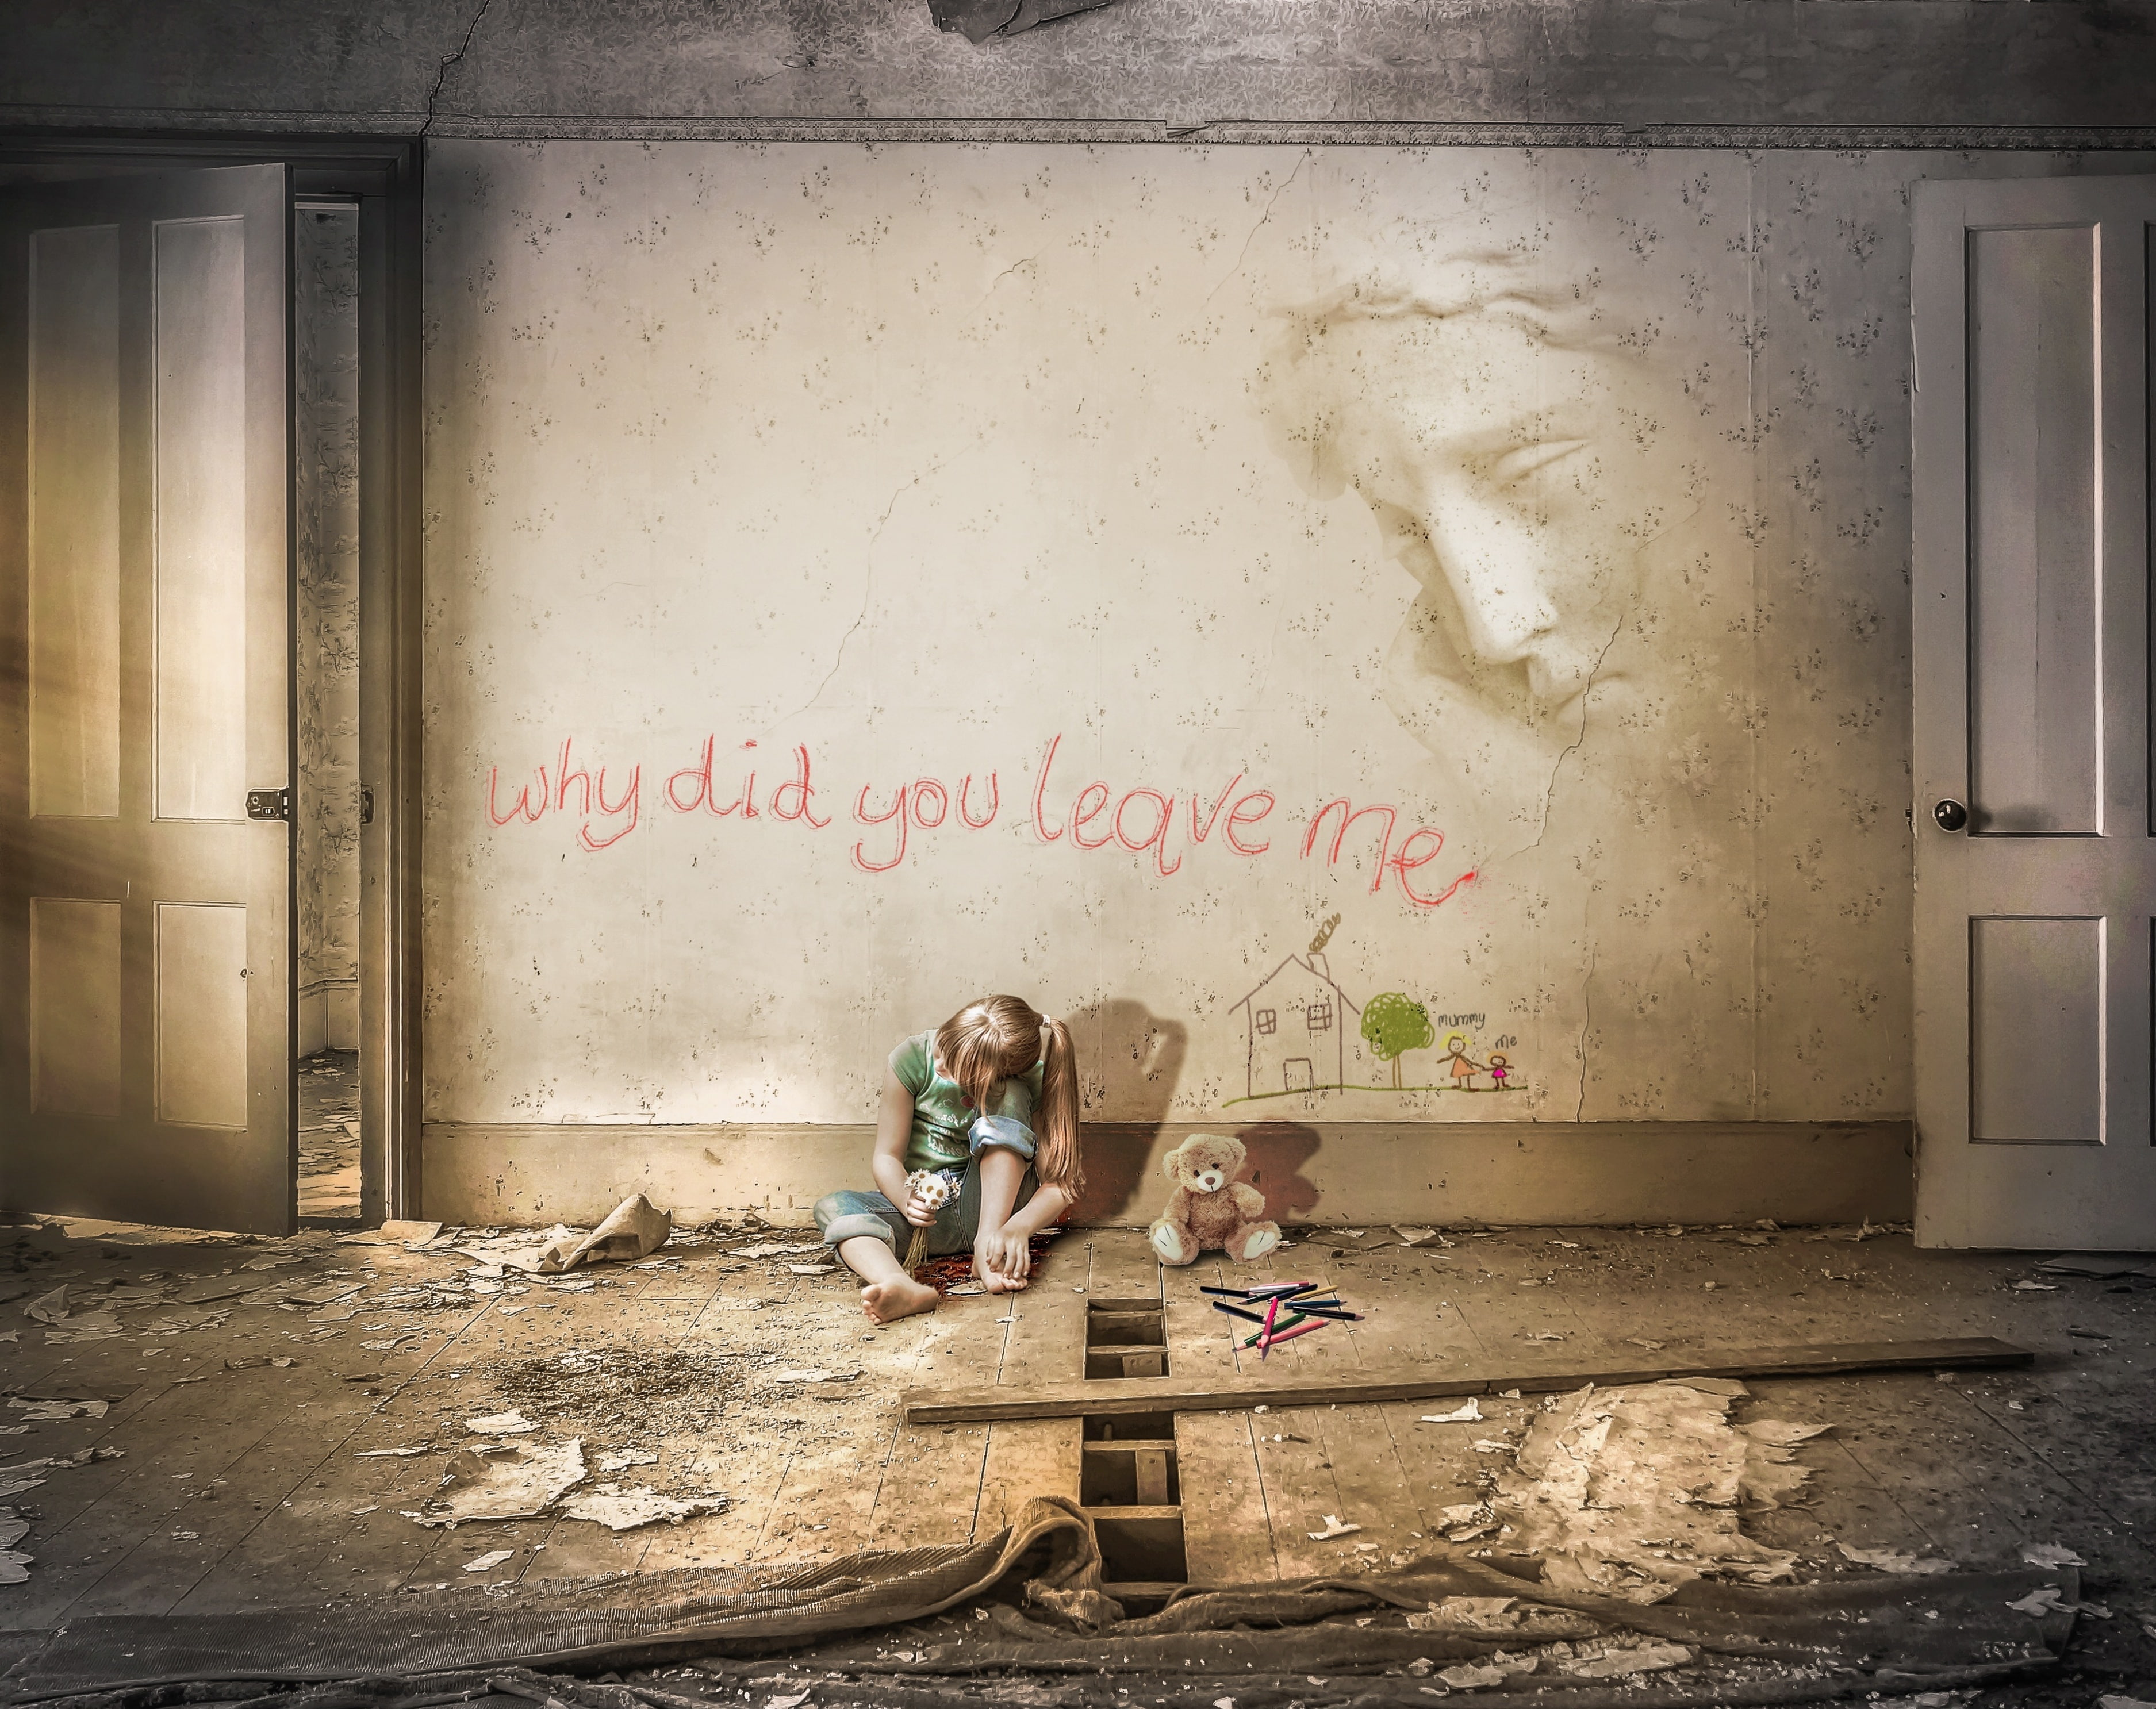 Abandoned Child, Charity, Family, Room, Alone, sorrow, awareness